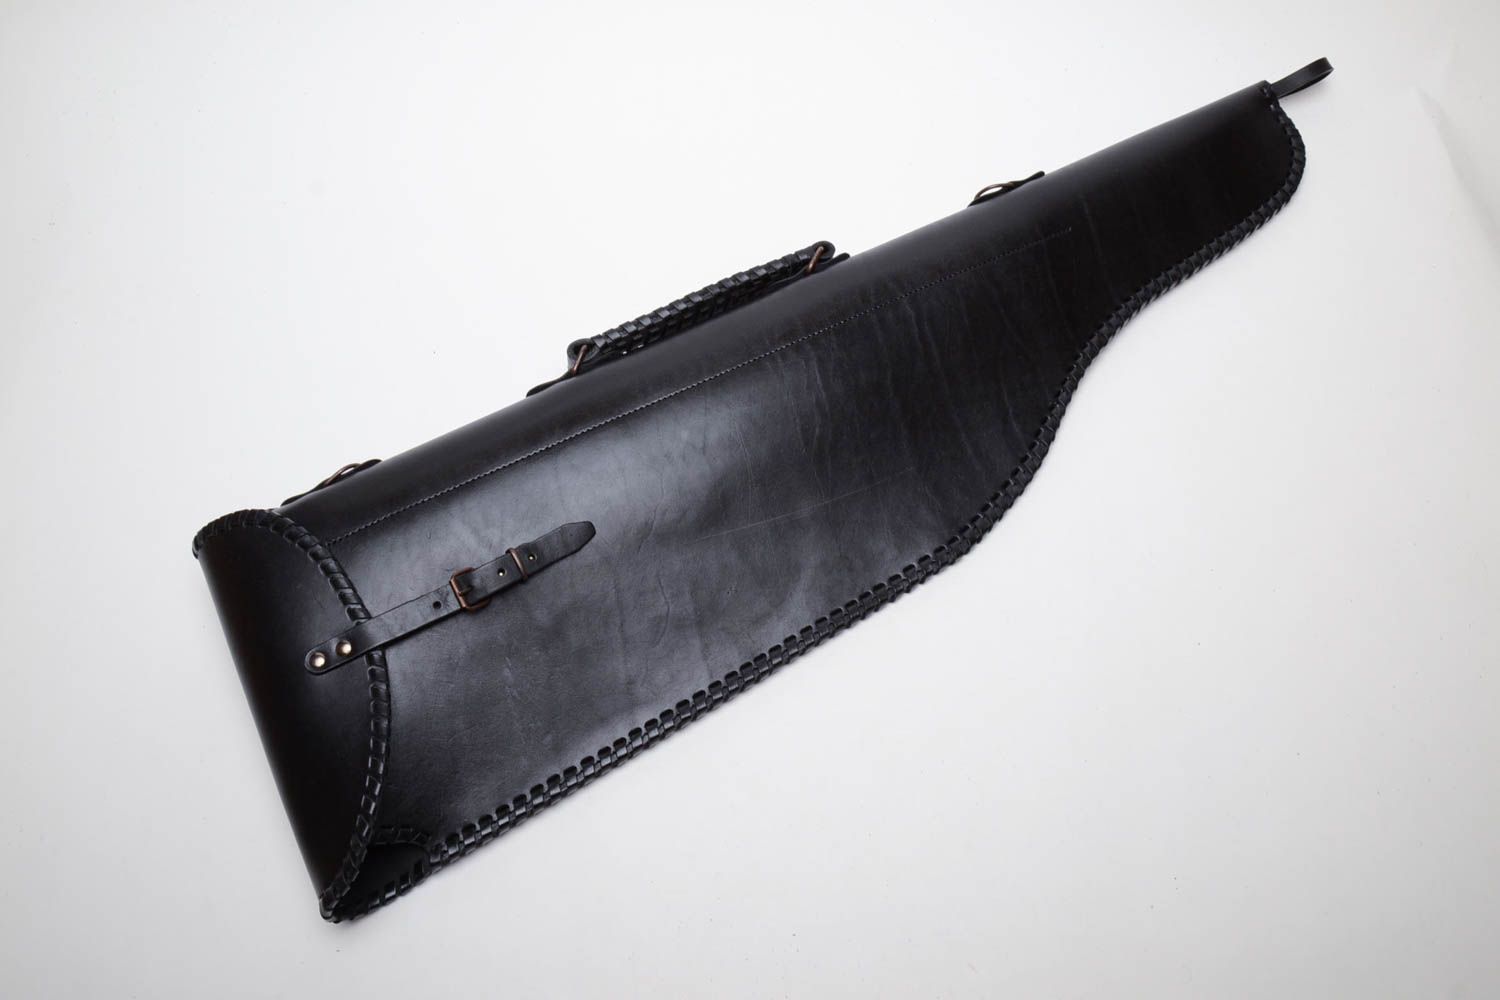 Leather gun case photo 2